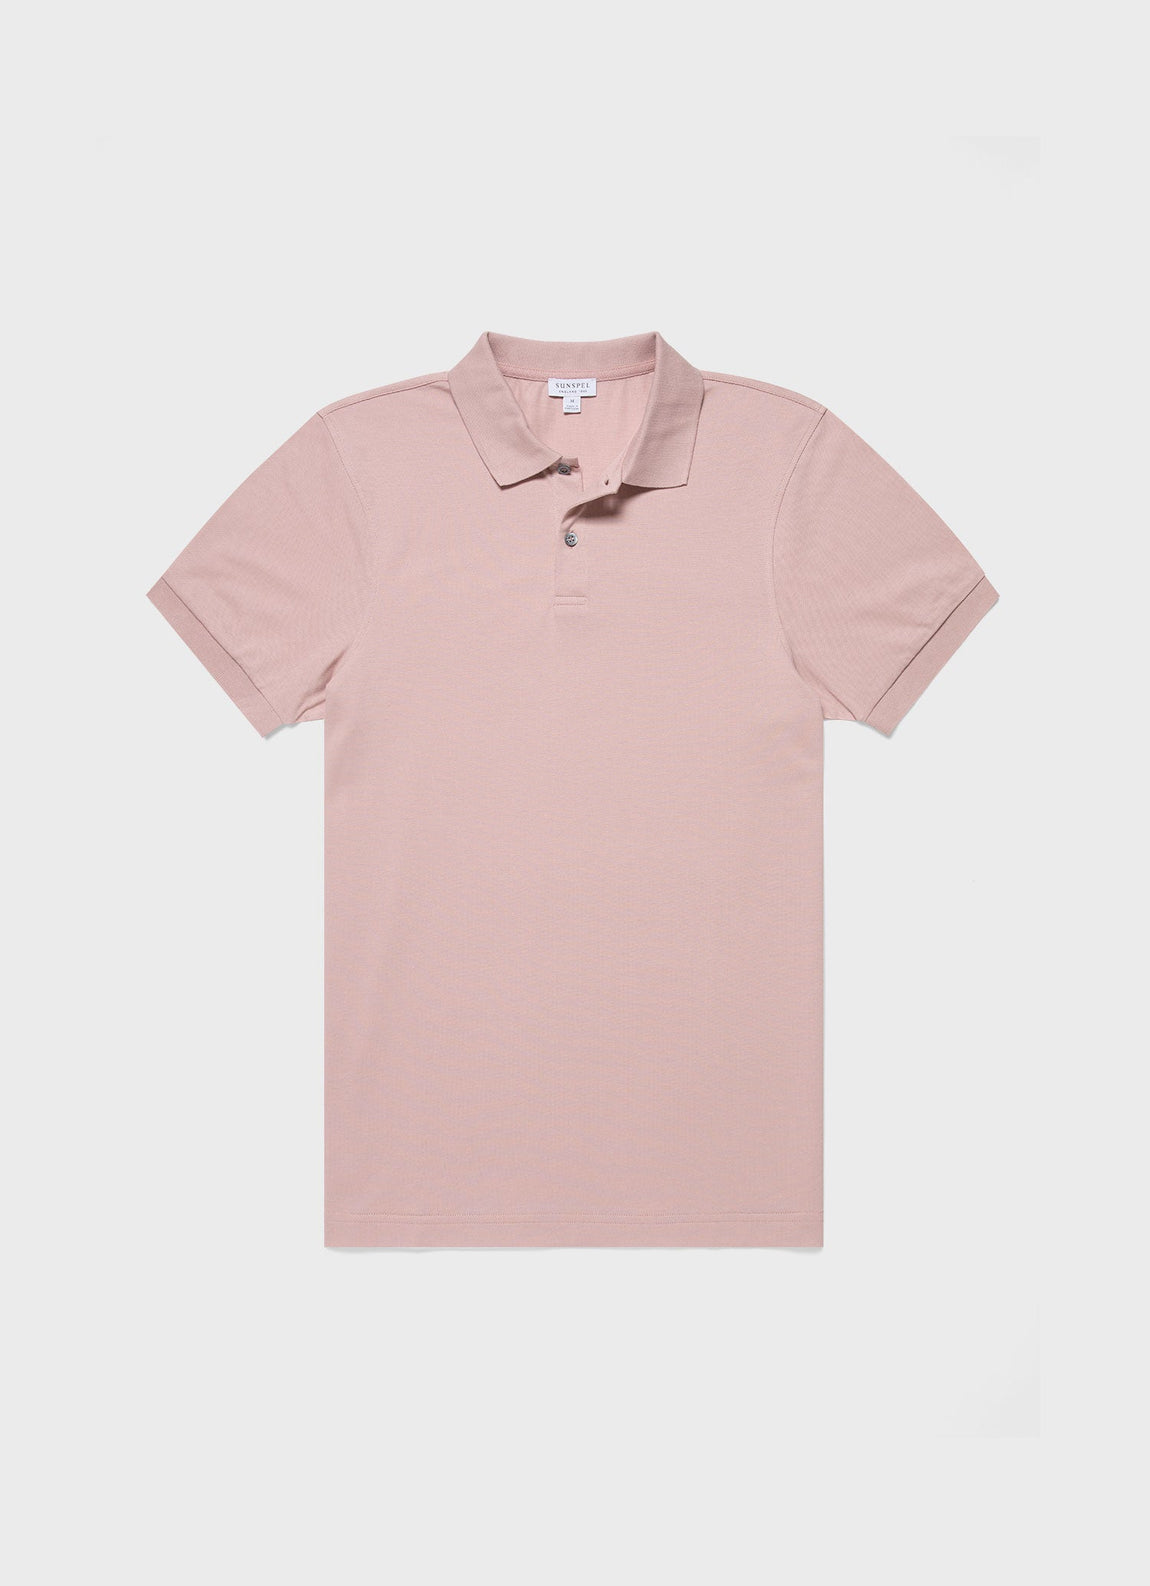 Men's Piqué Polo Shirt in Shell Pink